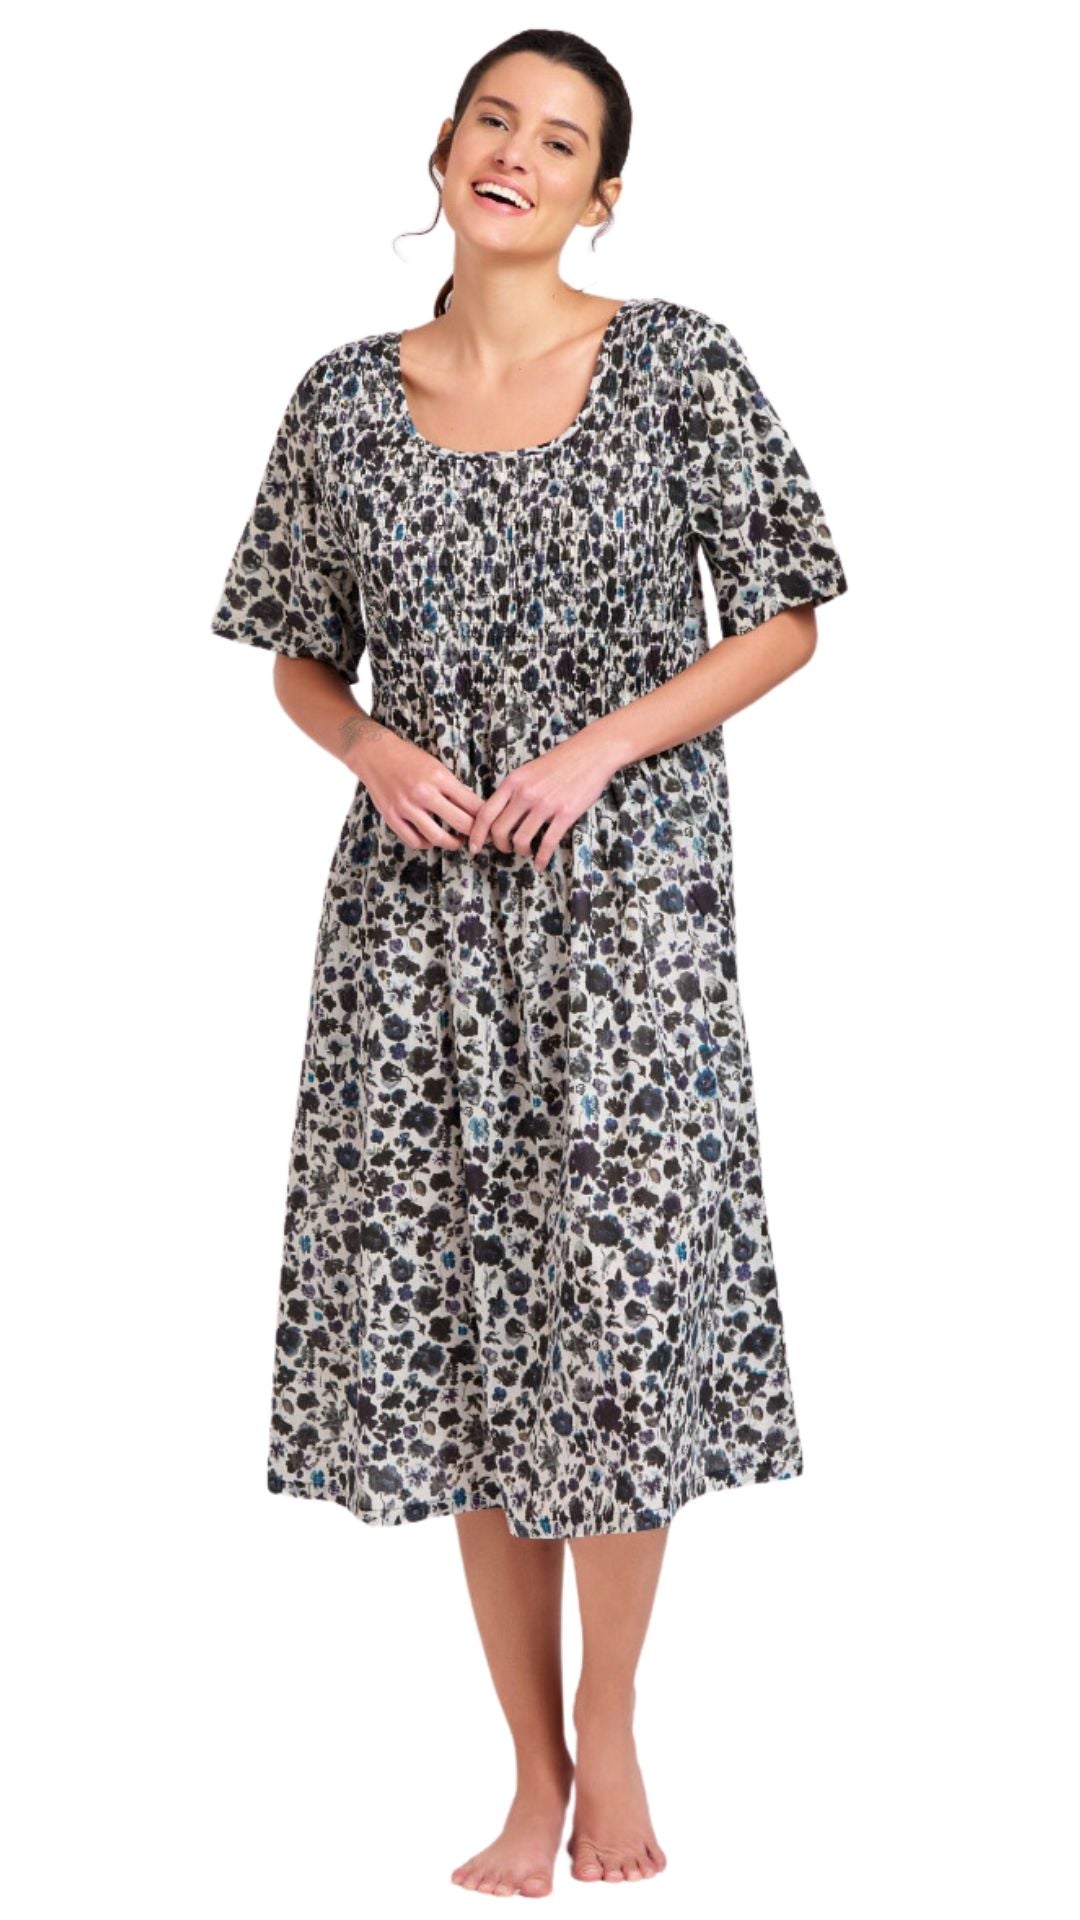 100% cotton plus sizes nightdress Australia on model